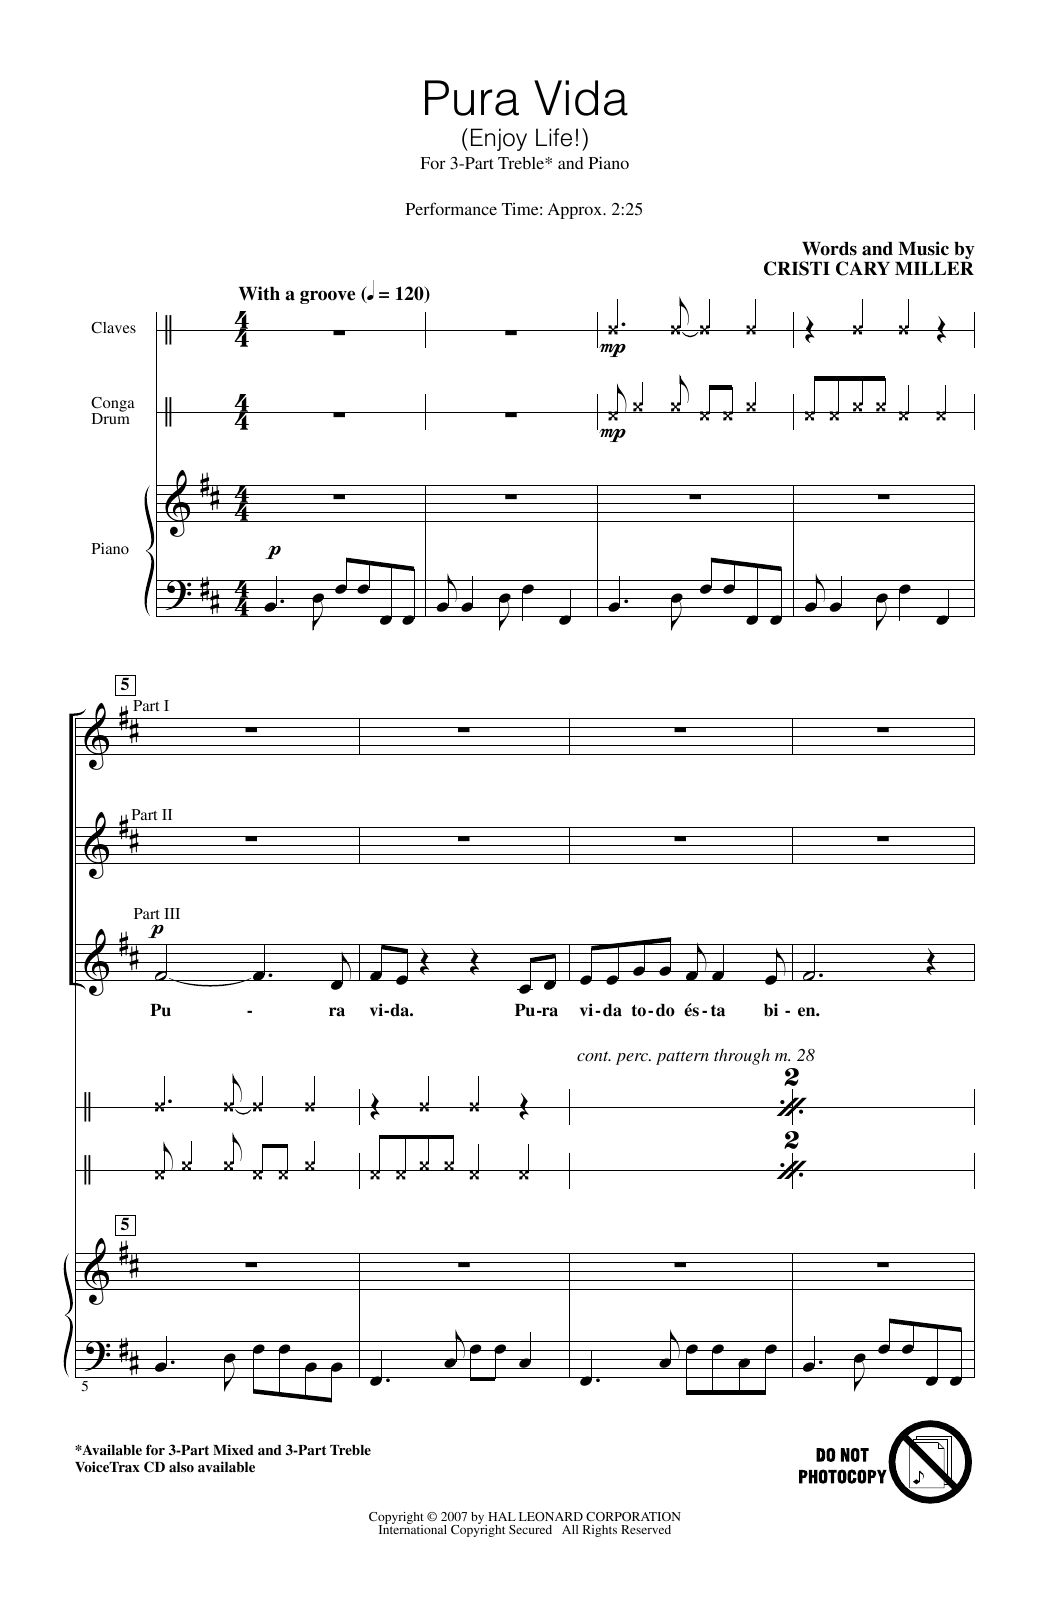 Cristi Cary Miller Pura Vida (Enjoy Life) Sheet Music Notes & Chords for 3-Part Treble - Download or Print PDF